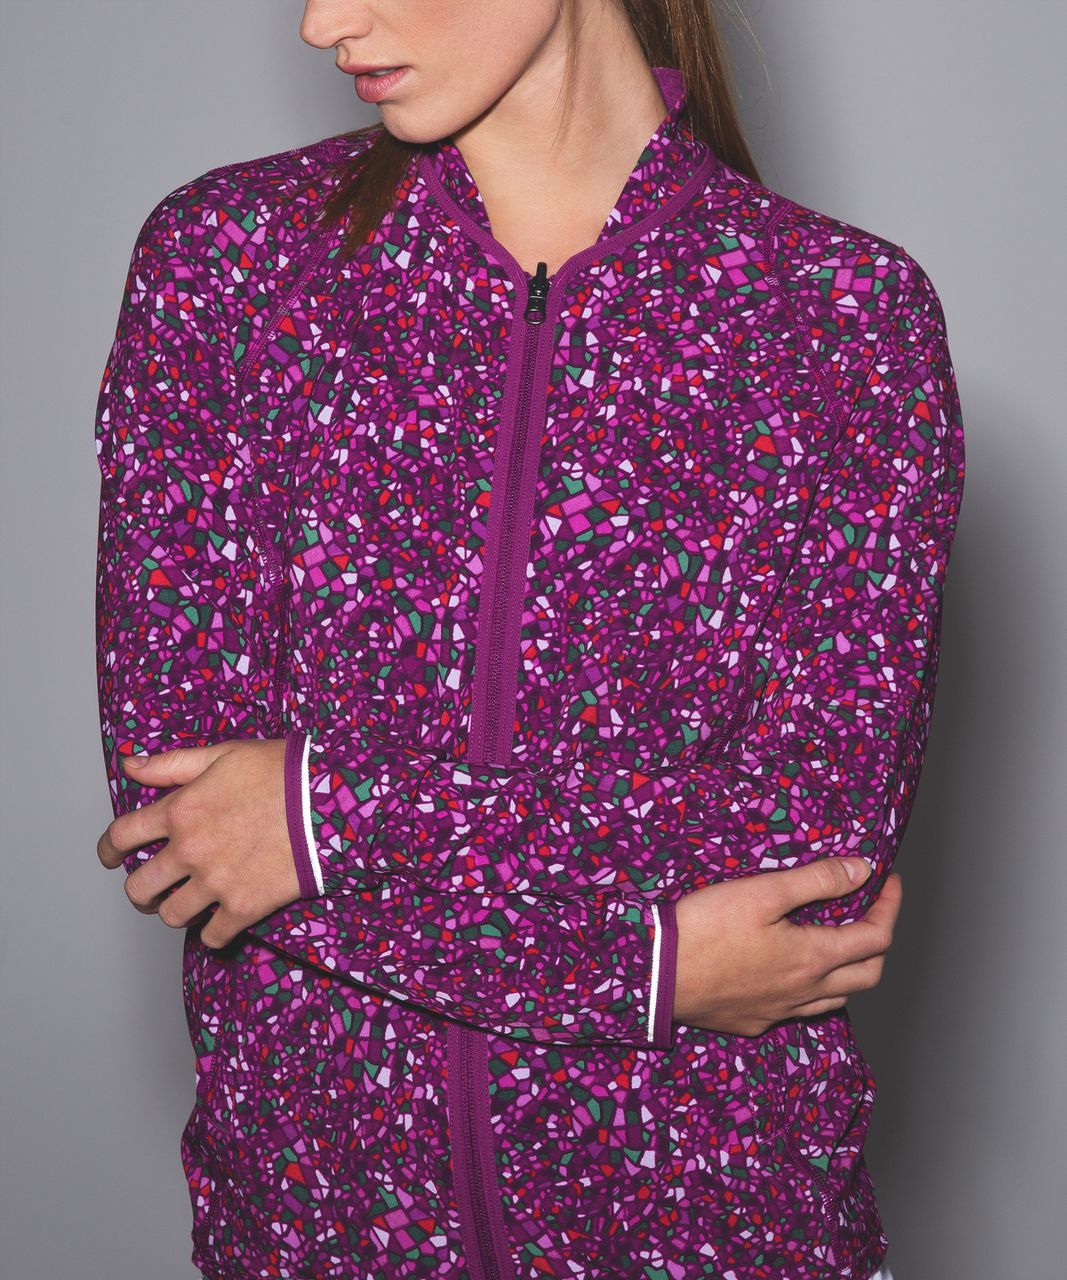 Lululemon Real Quick Jacket - Paradise Camo Multi / Heathered Texture Printed Ultra Violet Regal Plum